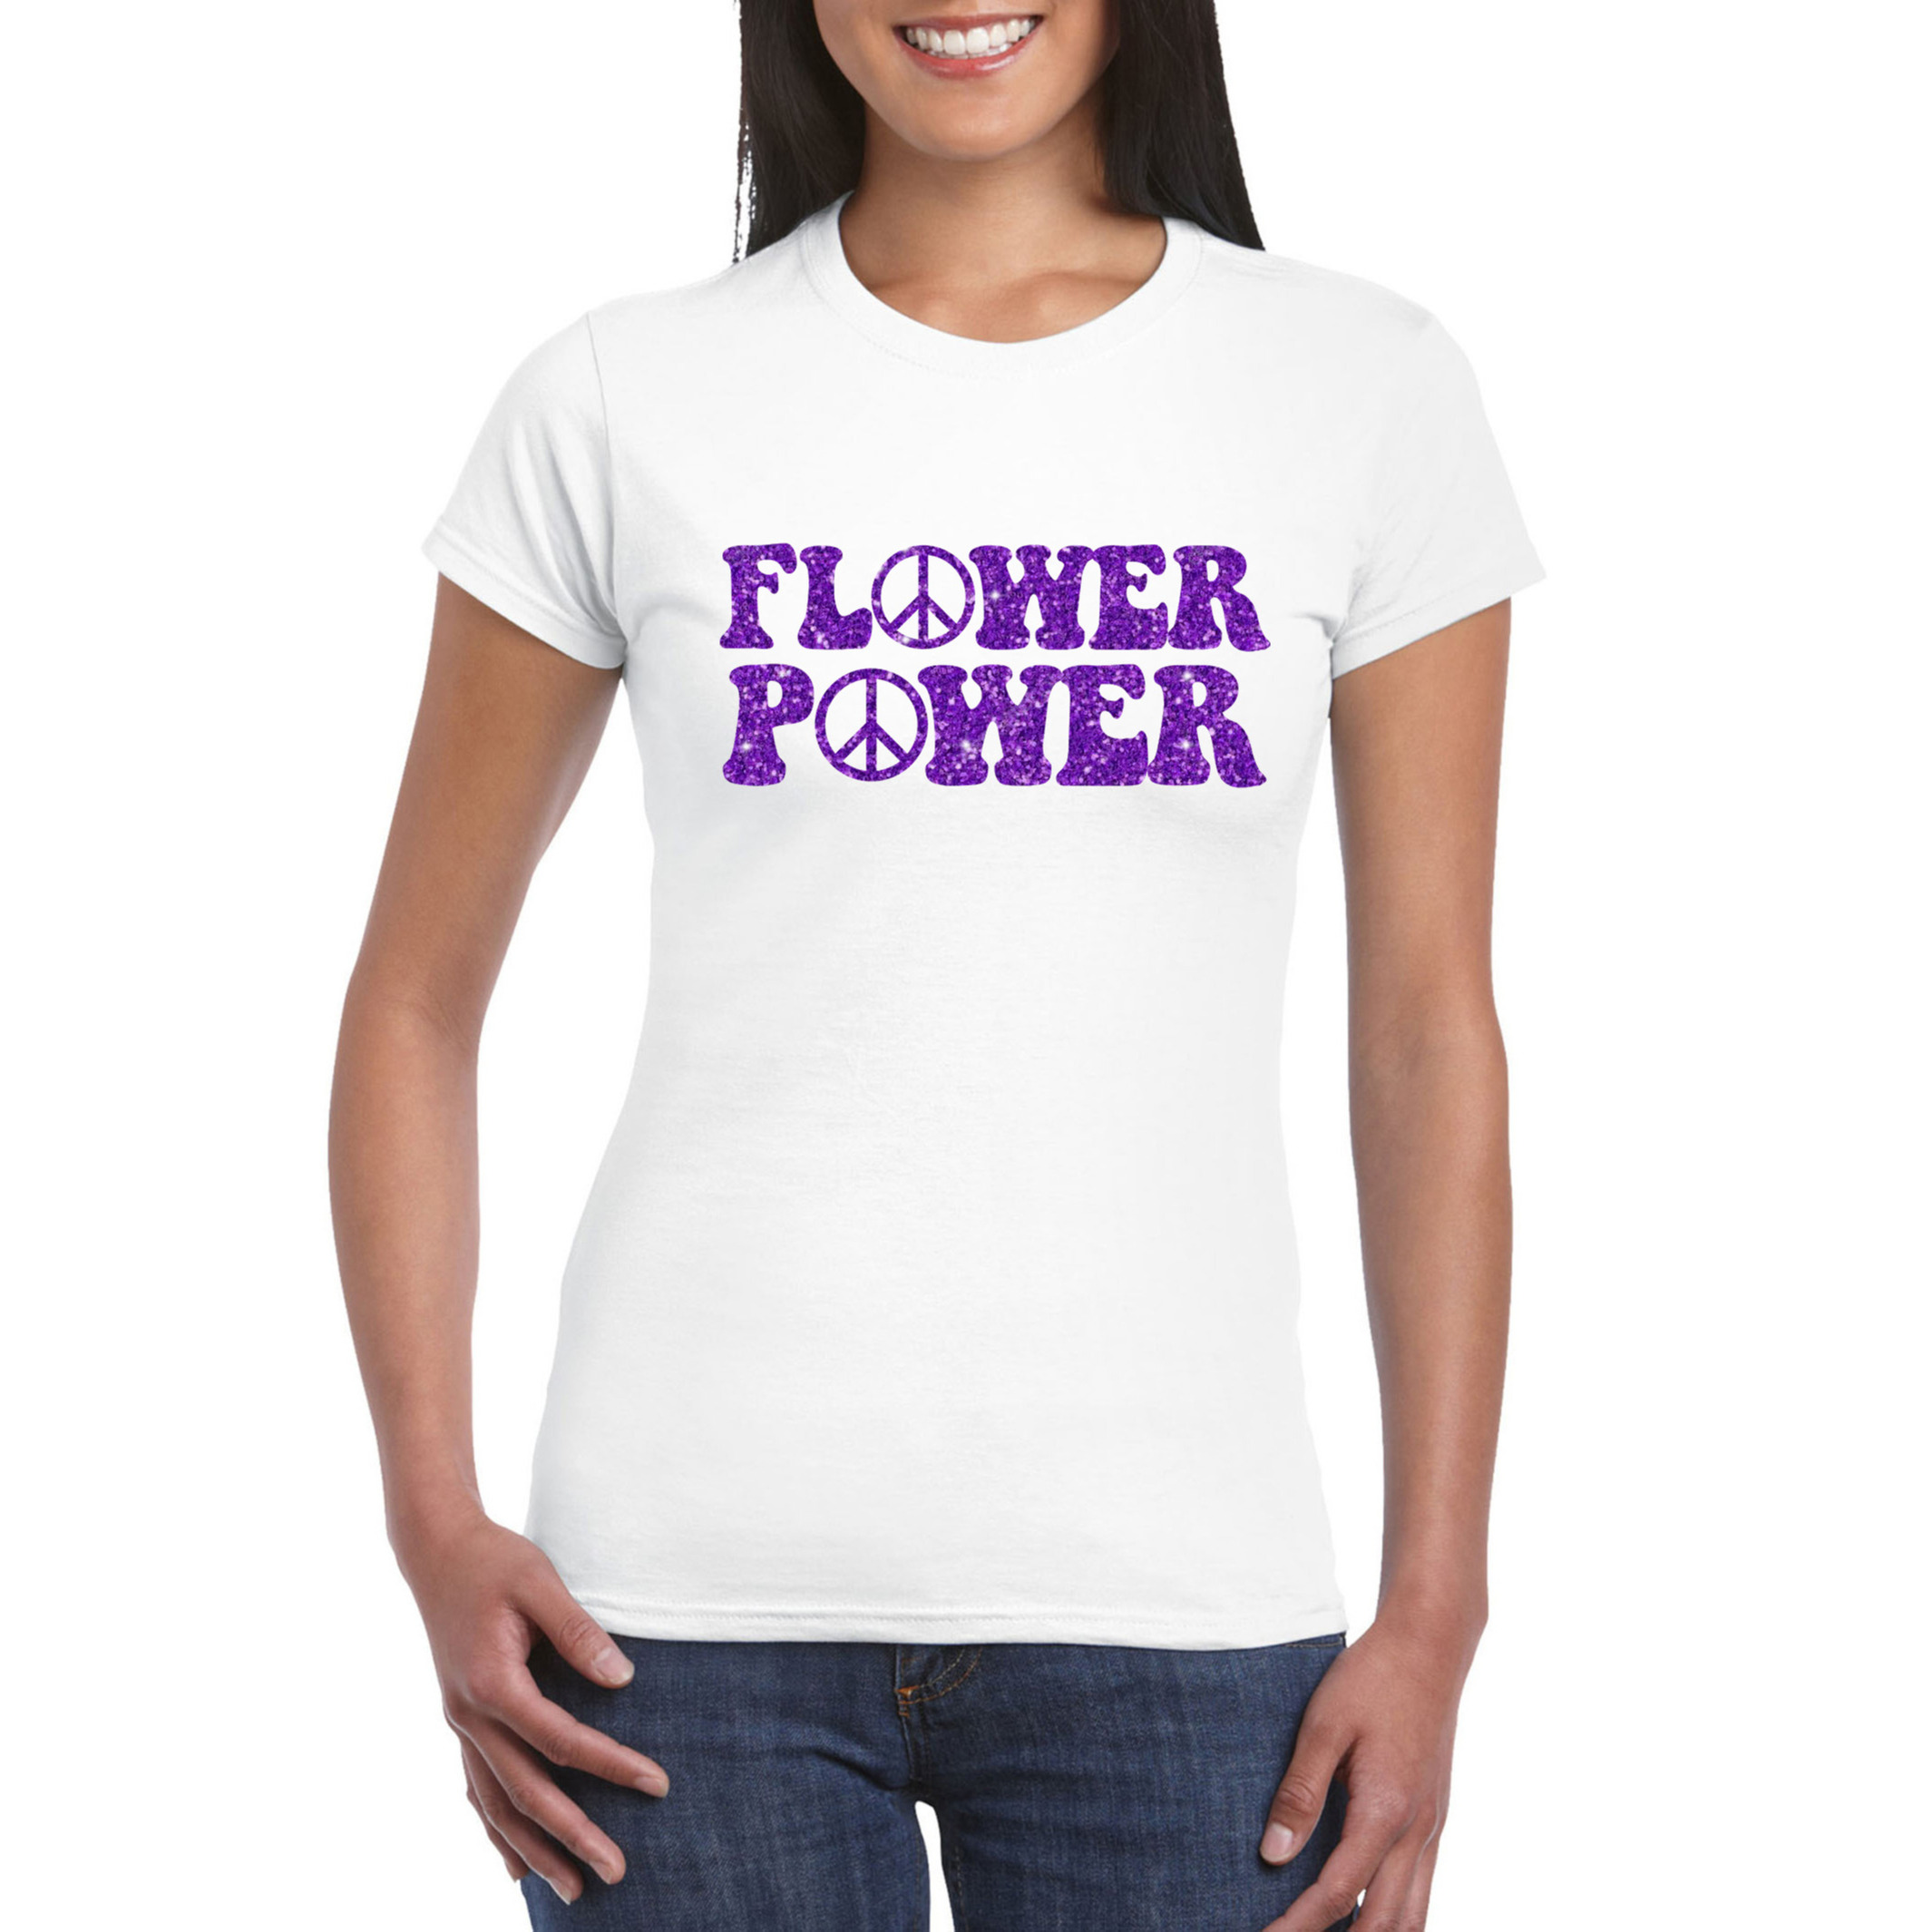 Wit Flower Power t-shirt peace tekens met paarse letters dames